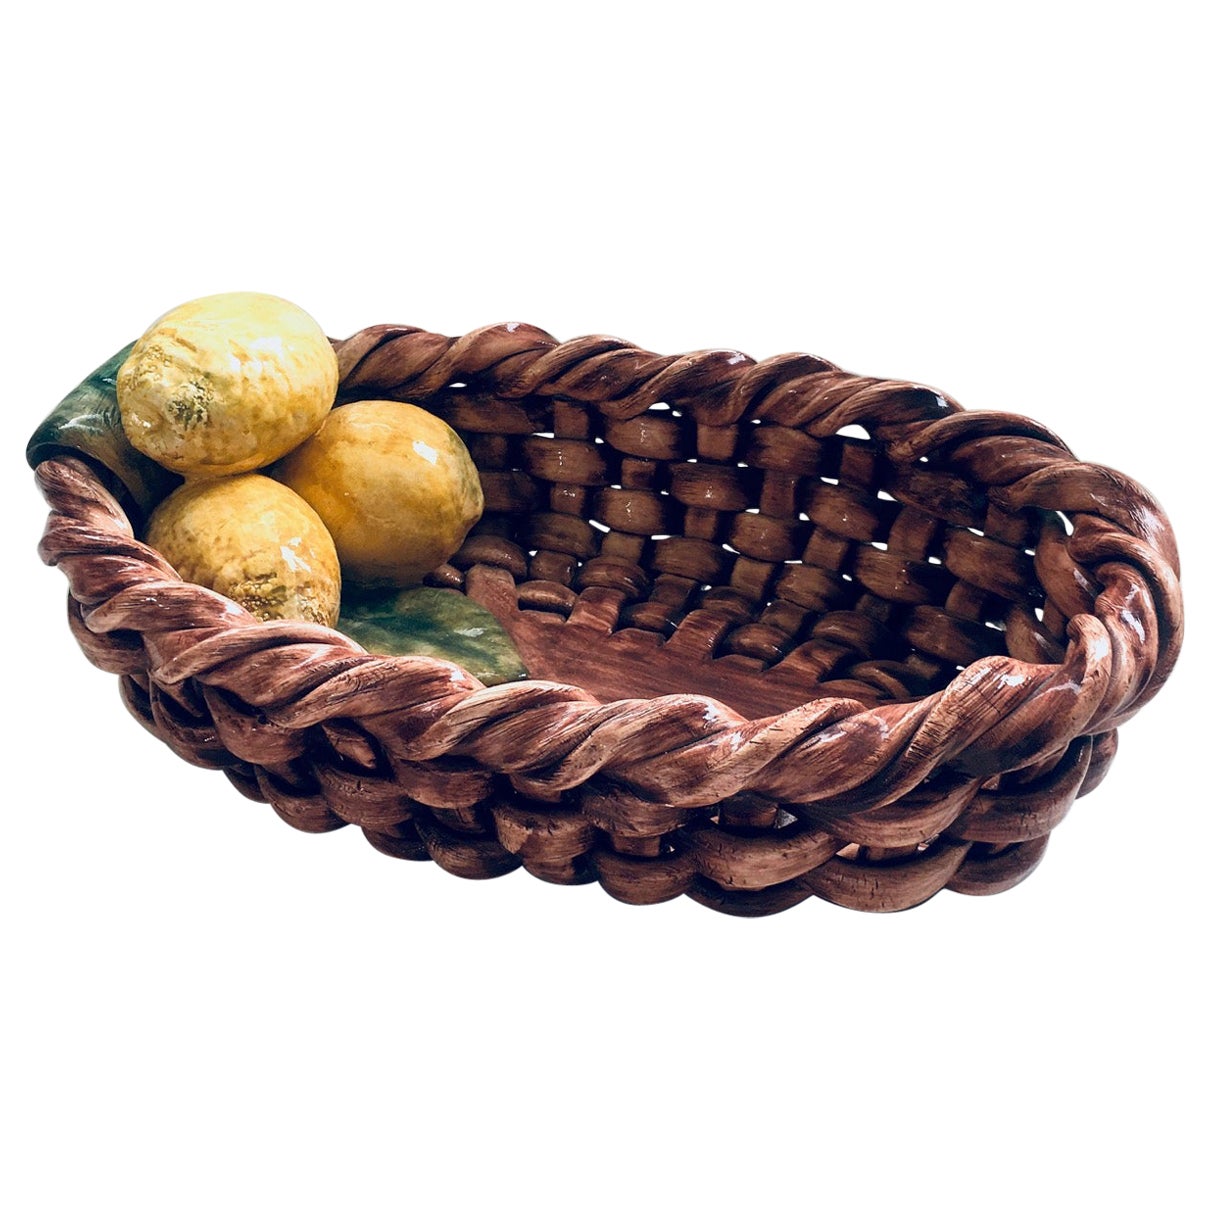 Studio Pottery Citrus Fruit Basket by J. Santos for Alcobaca, Portugal 1950's For Sale